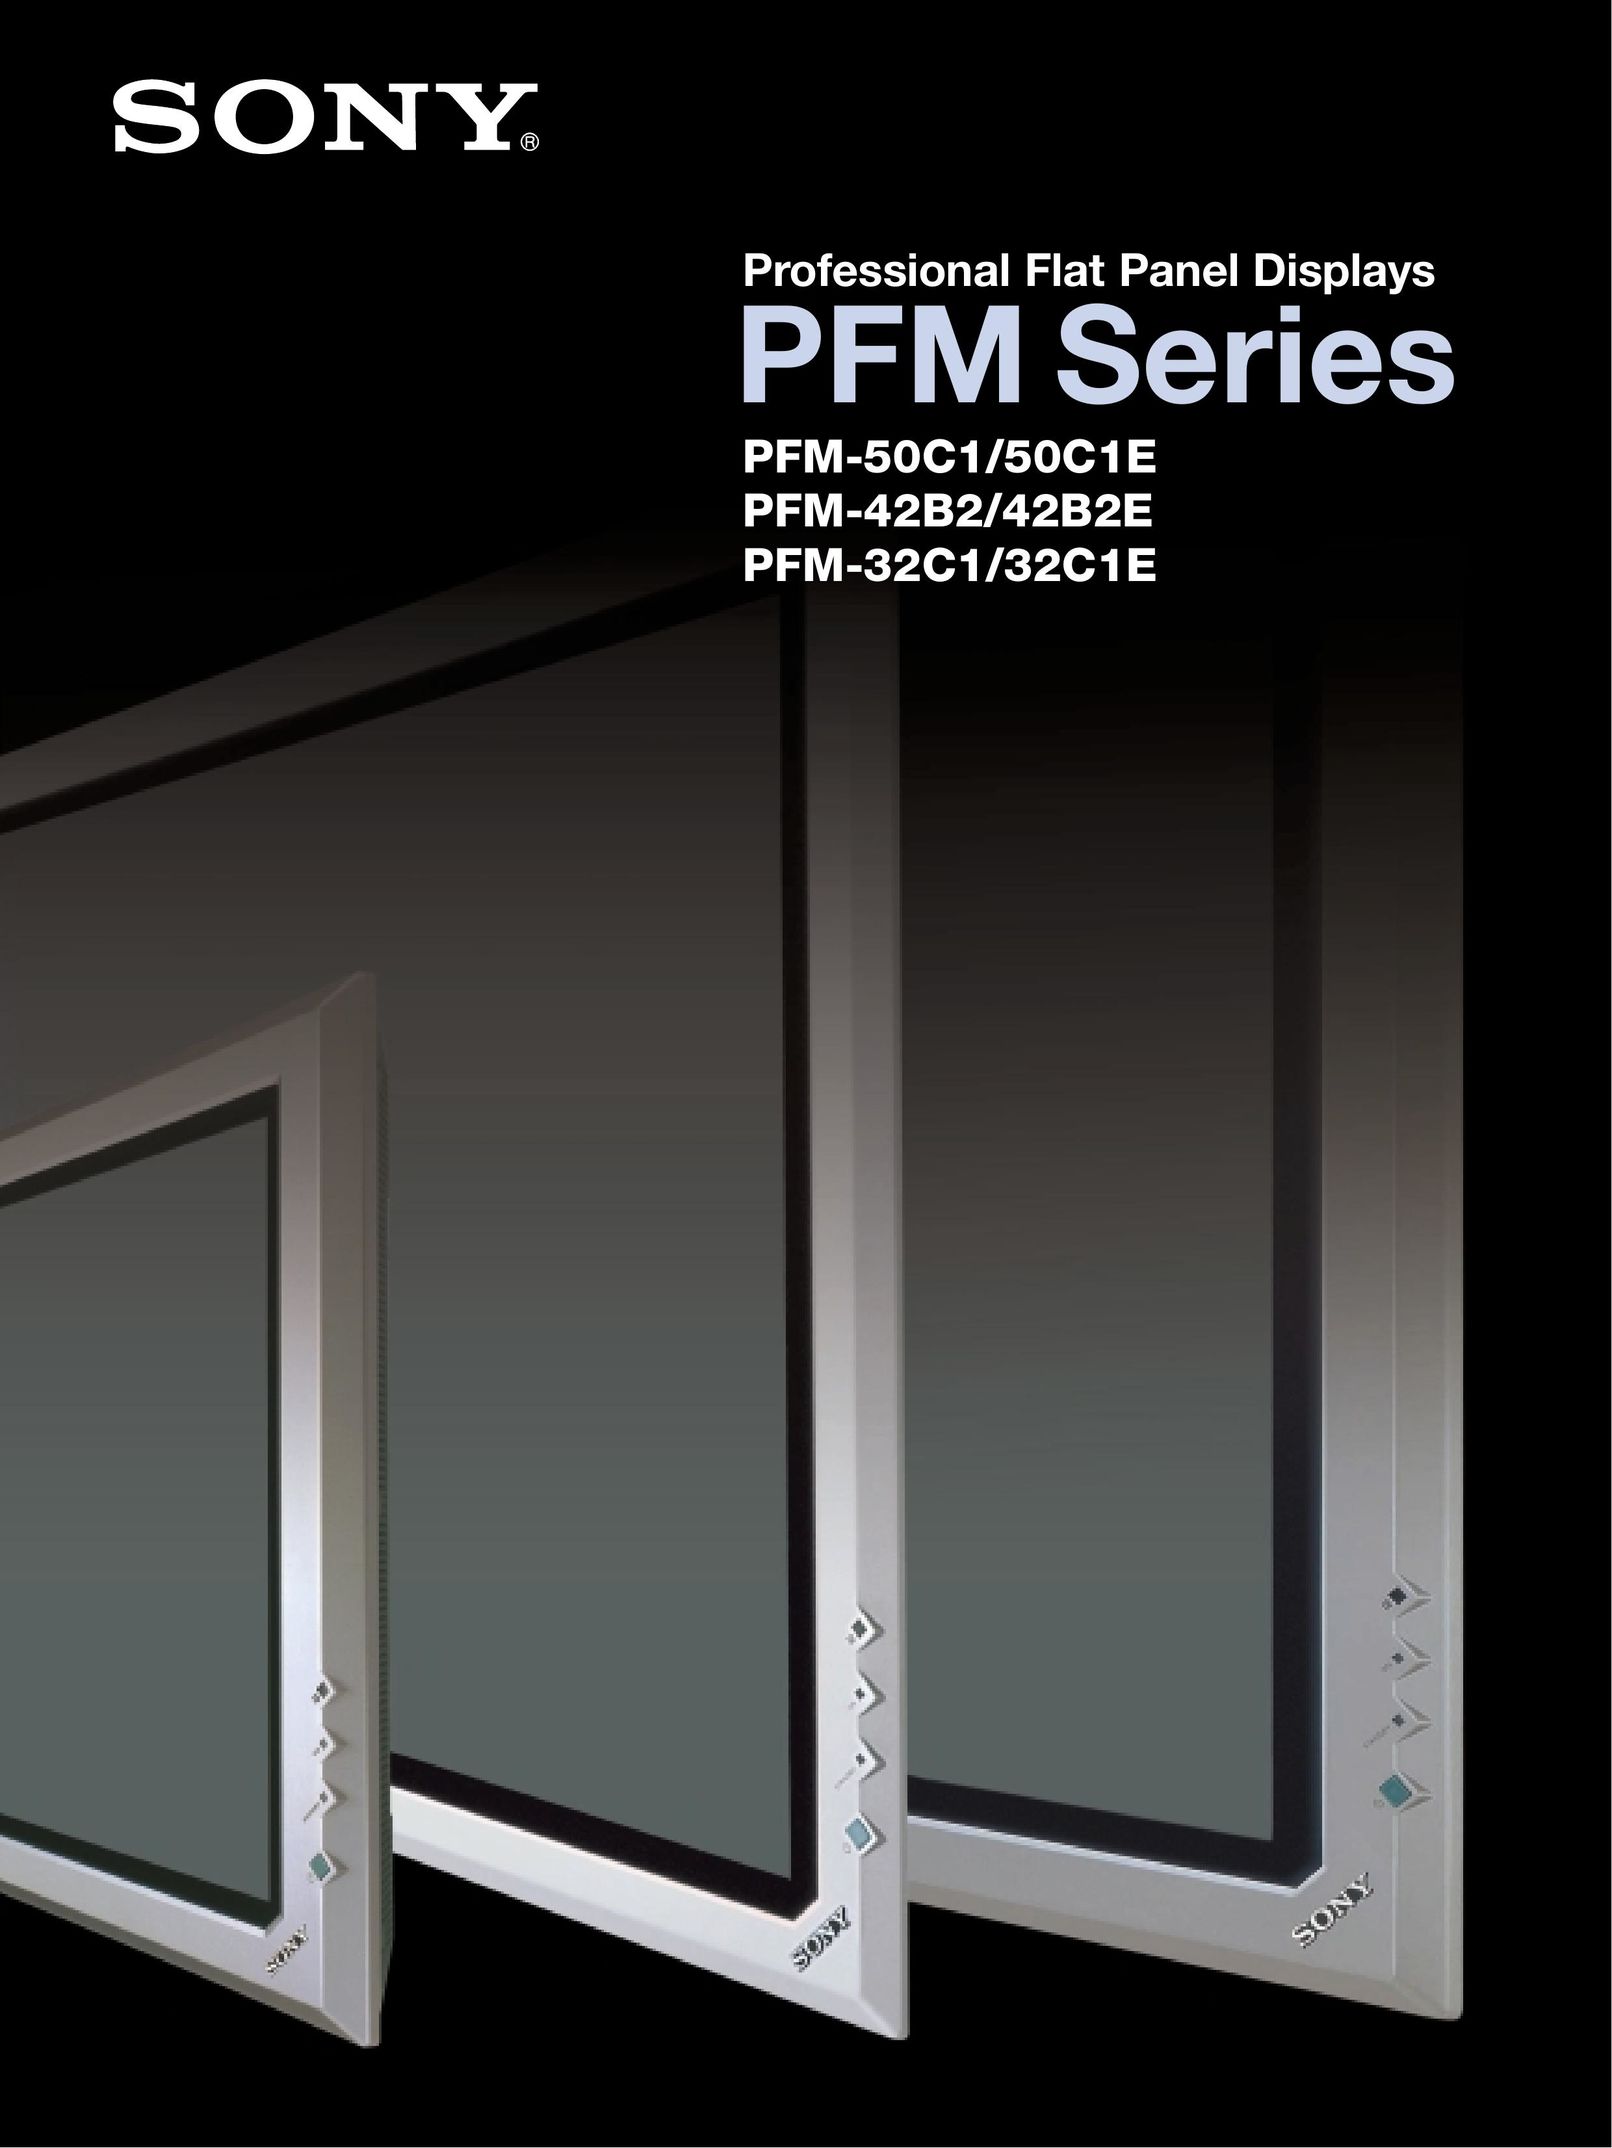 Matrox Electronic Systems PFM-42B2/42B2E Flat Panel Television User Manual